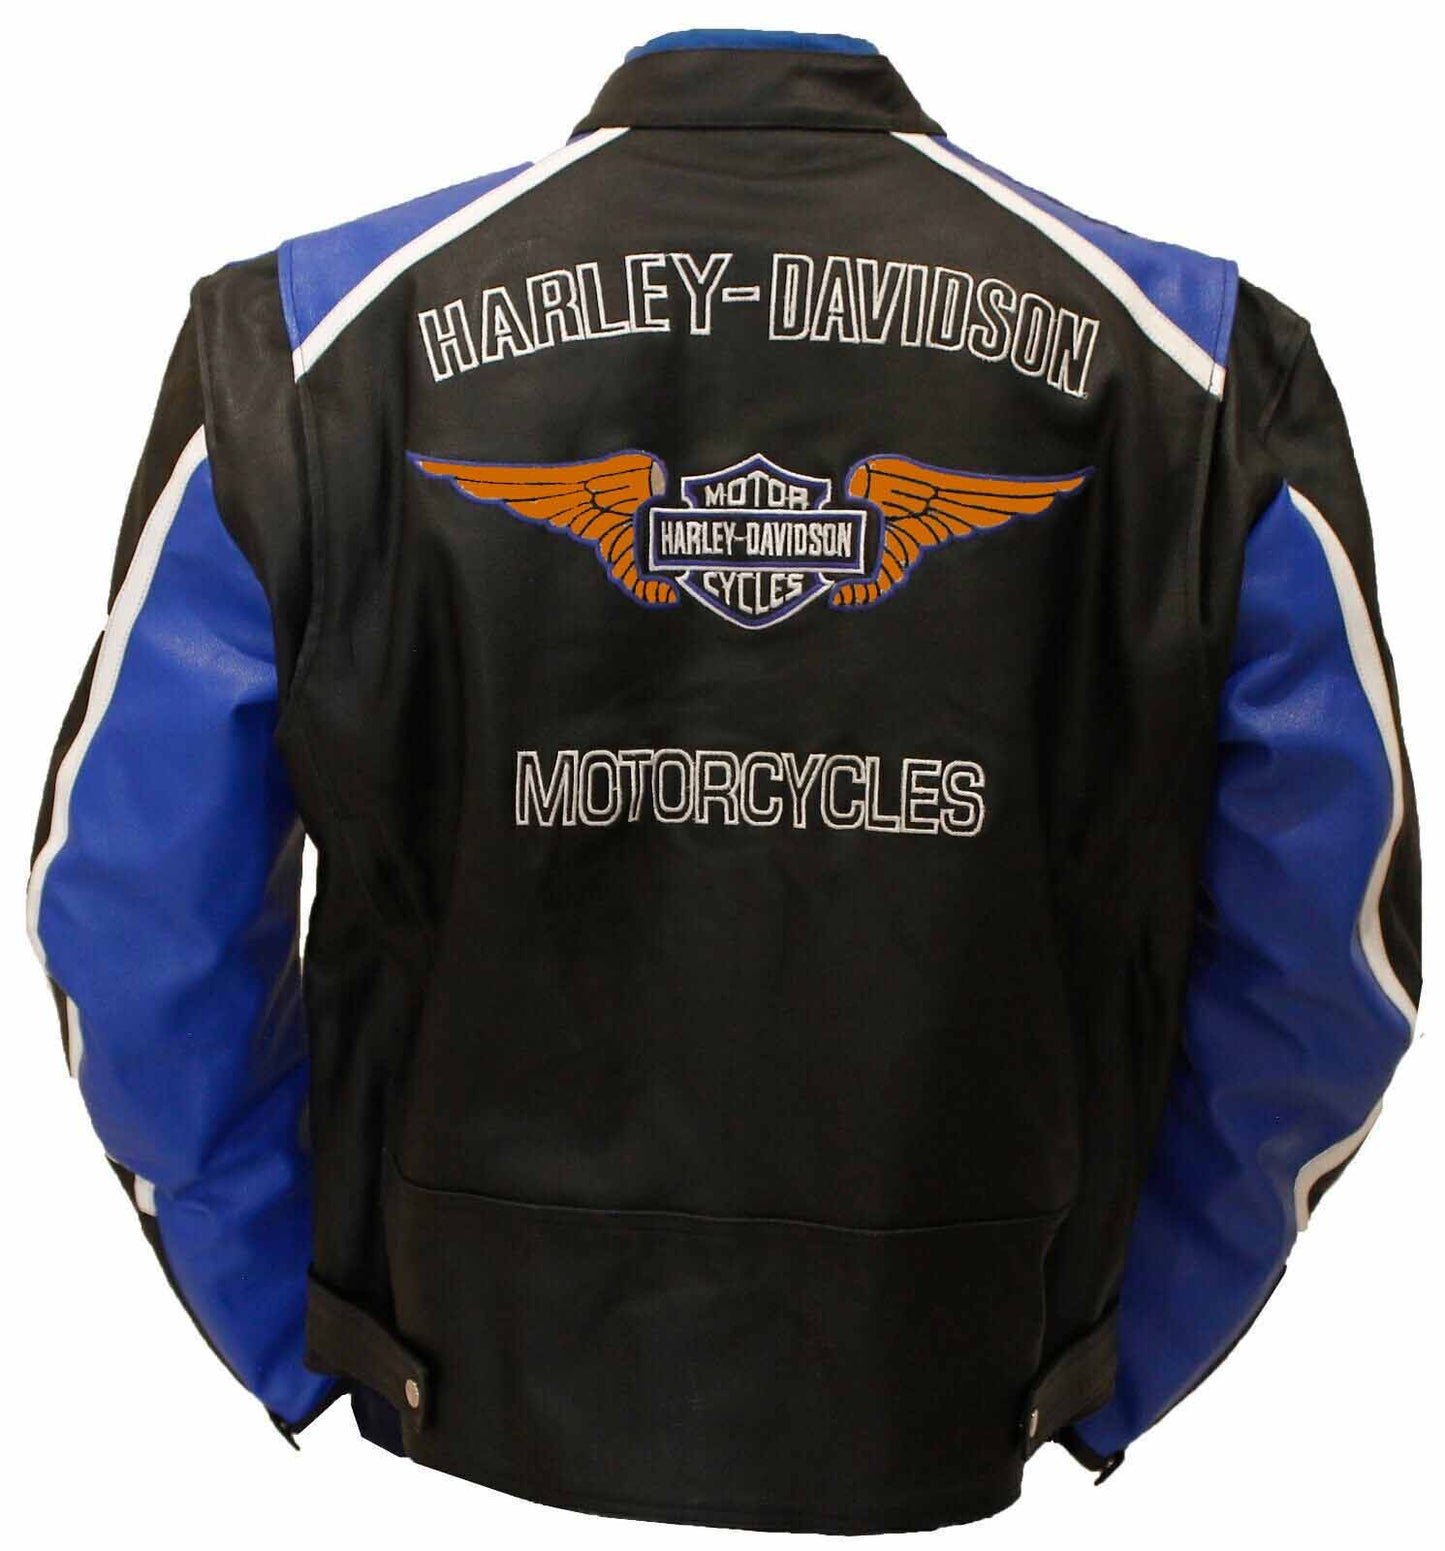 Harley Davidson jacket Harley leather jacket motorcycle leather jacket Harley embroidered patches genuine leather jacket biker leather jacket men luxury jacket gift for him men's fashion men's outfits use jackets network fashion men's biker jacket black biker jacket men